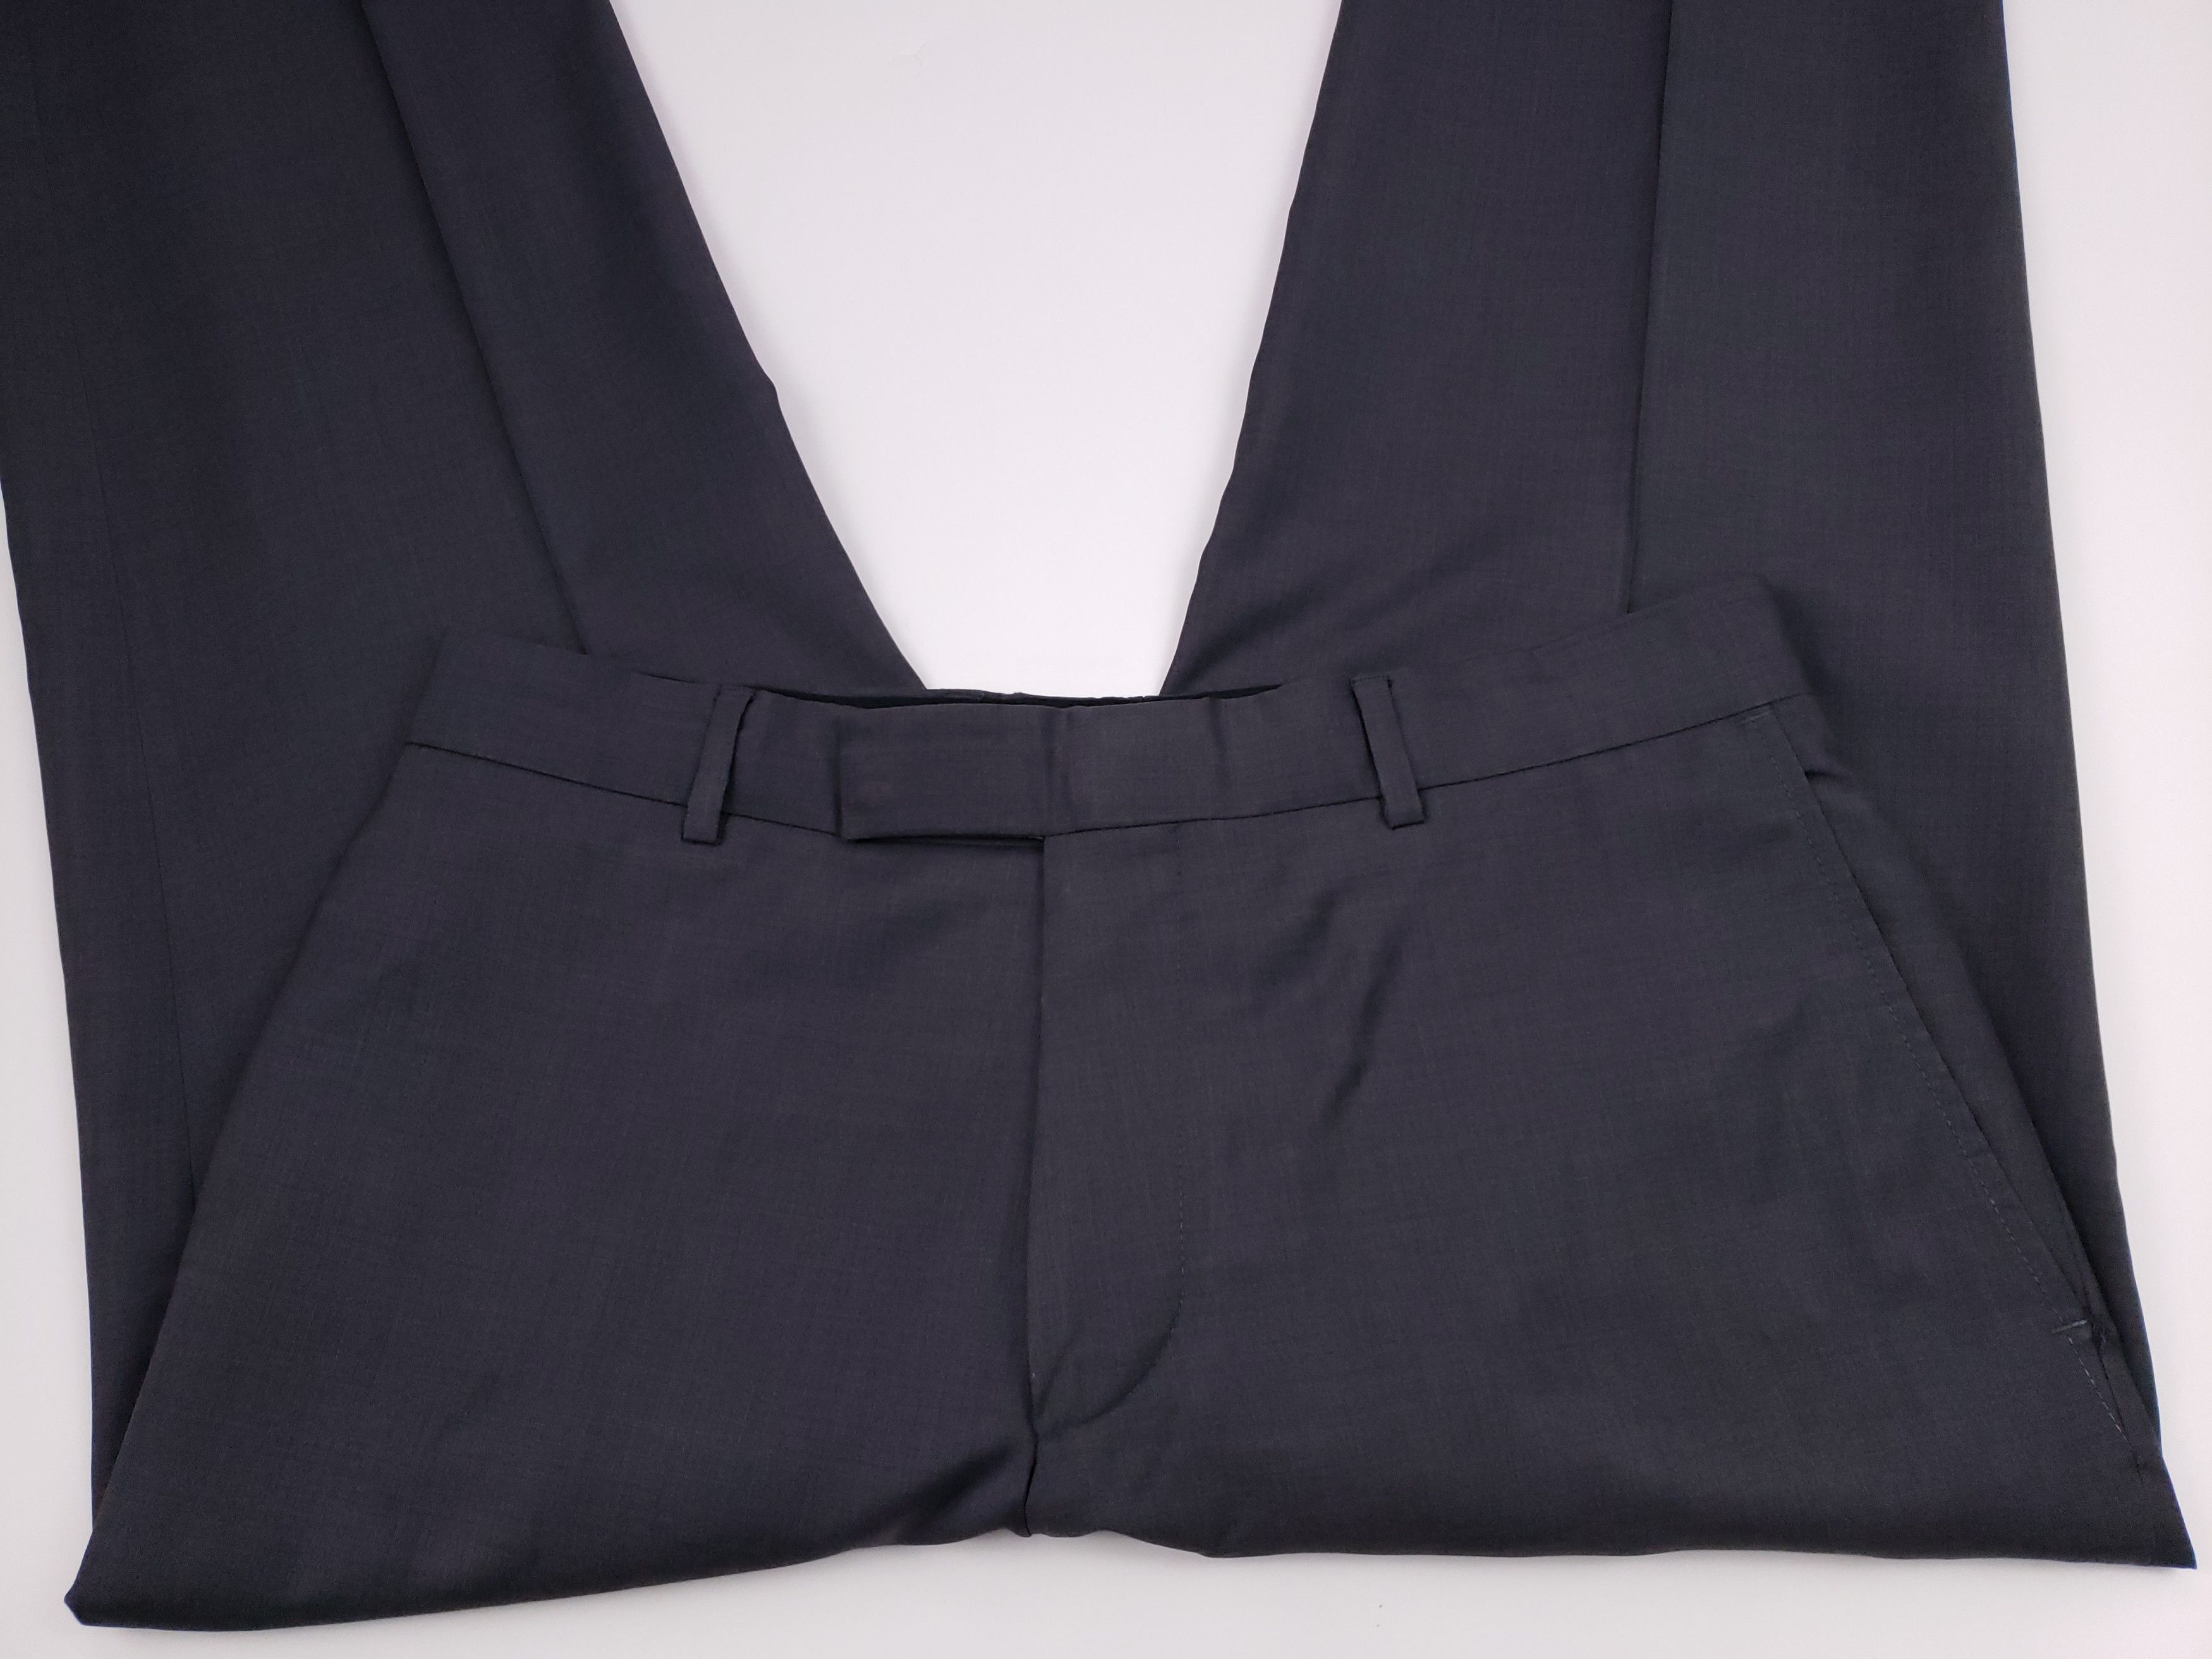 Hugo Boss Hugo Boss James Brown Pants 32x30 Gray Charcoal Wool Cashme Size US 32 / EU 48 - 6 Thumbnail